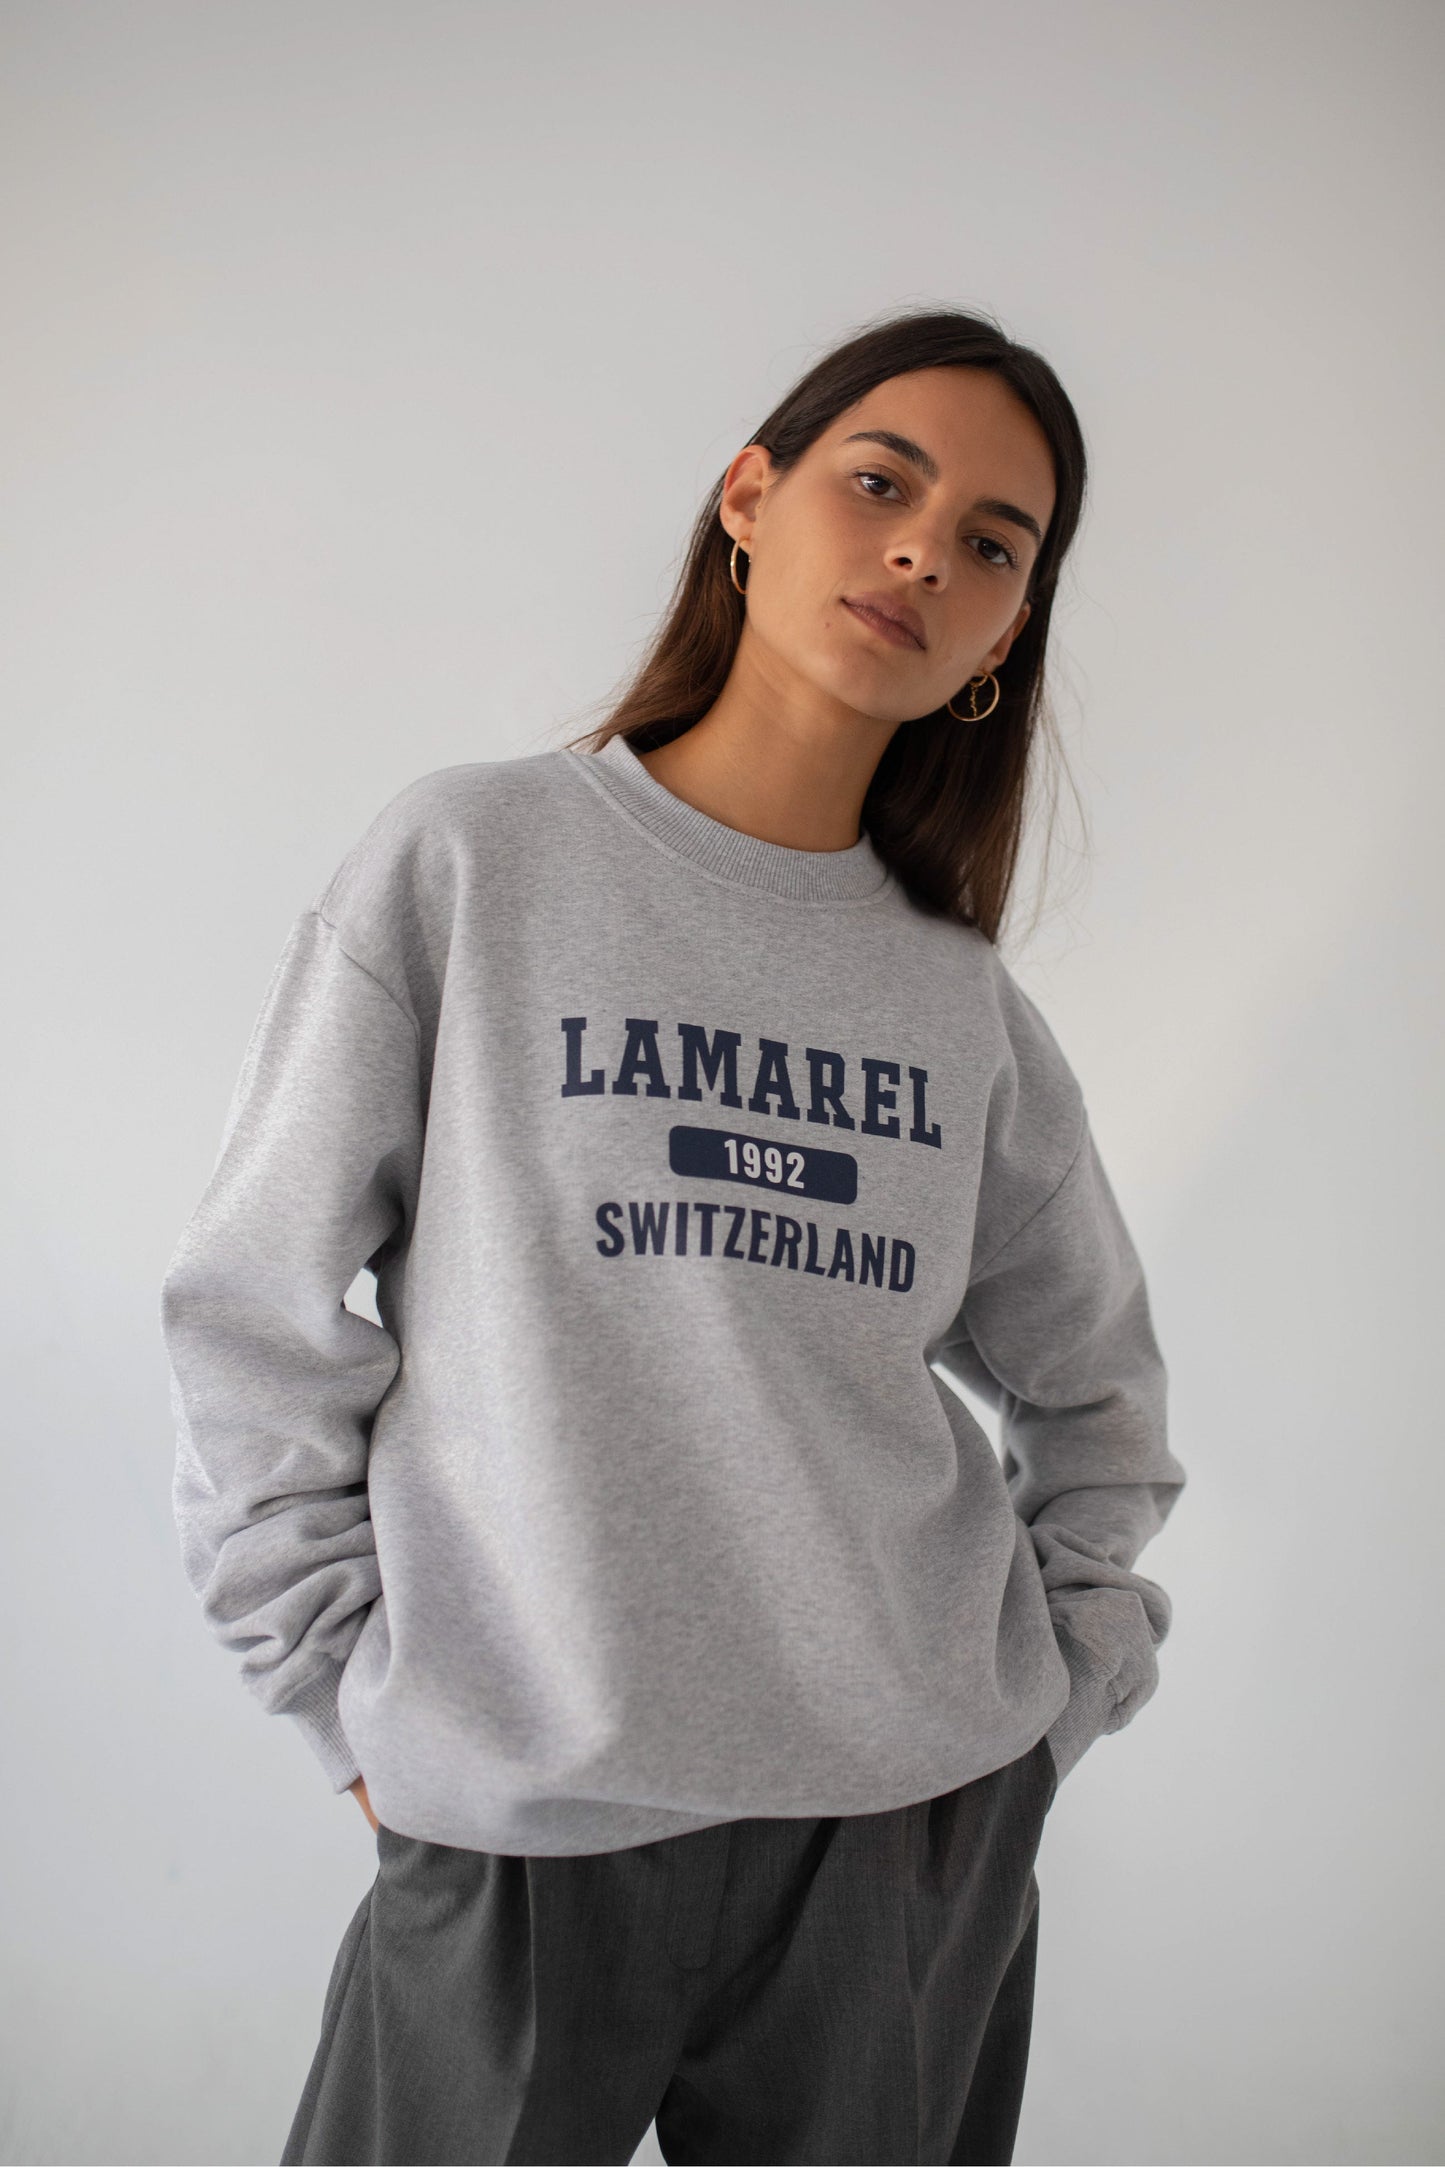 LAMAREL SWITZERLAND SWEATER